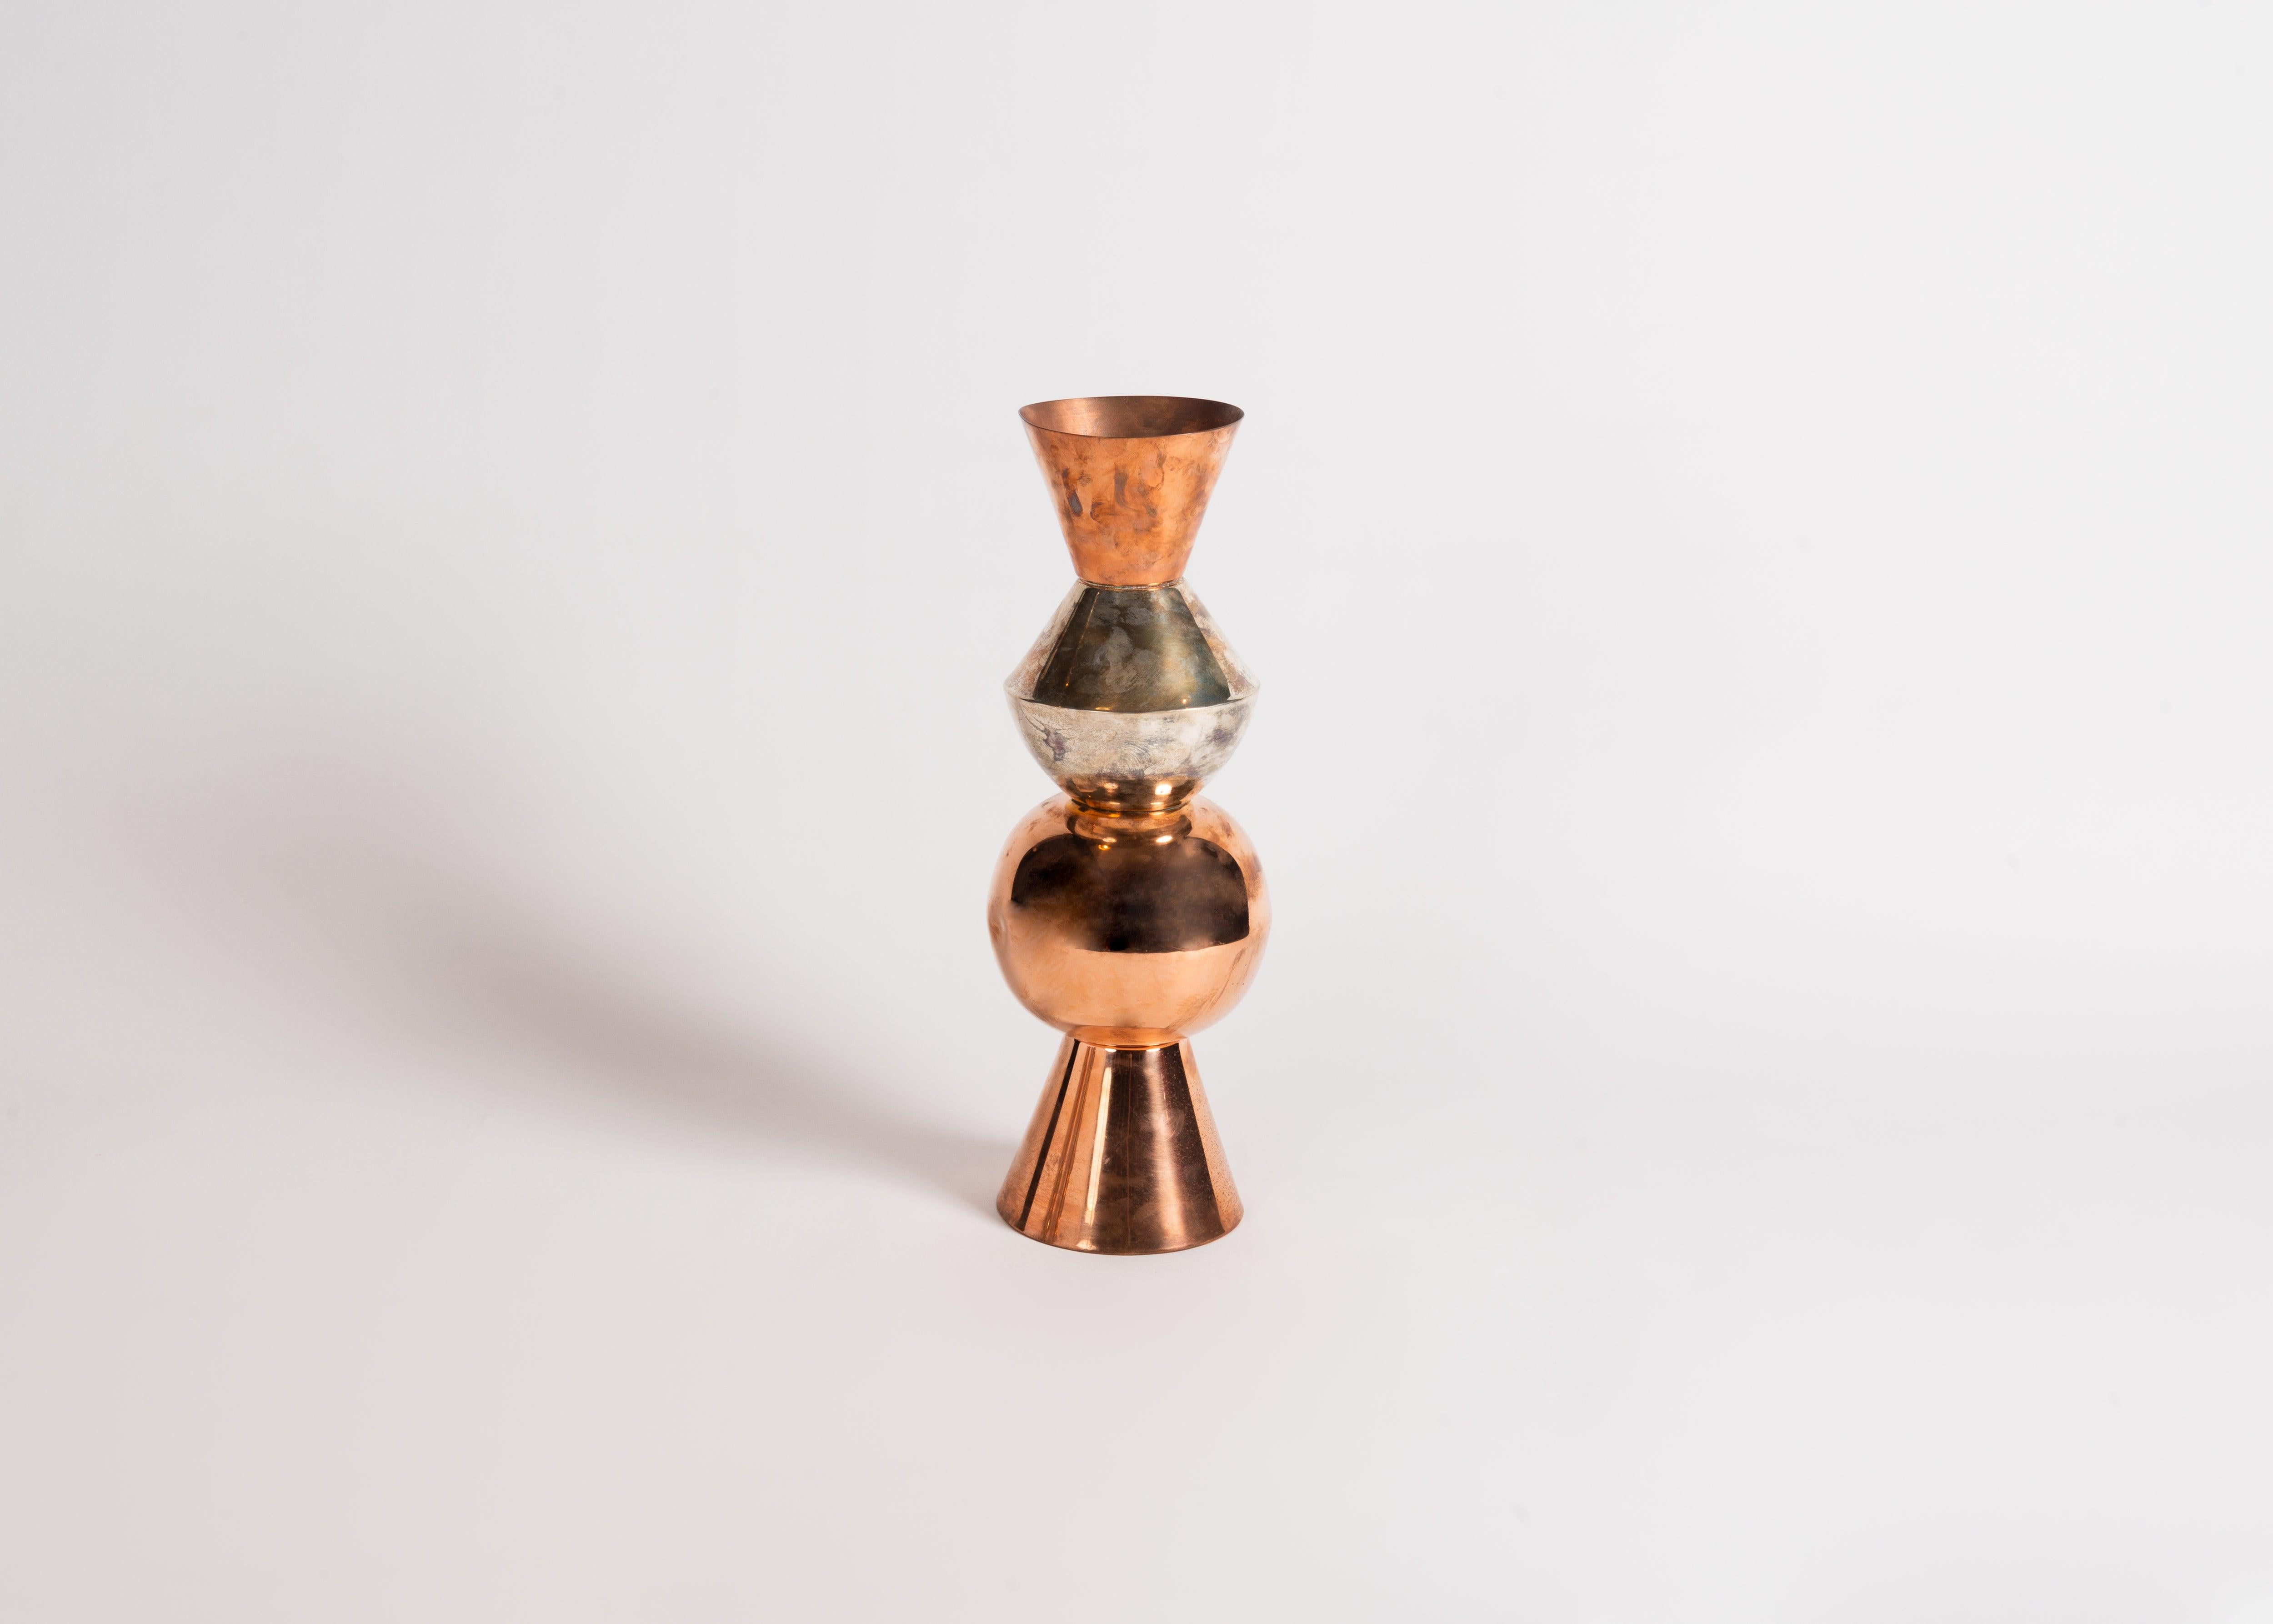 Mexicain Vase contemporain en cuivre « Totem Jarron Mediano » de Laura Kirar, Mexique, 2018